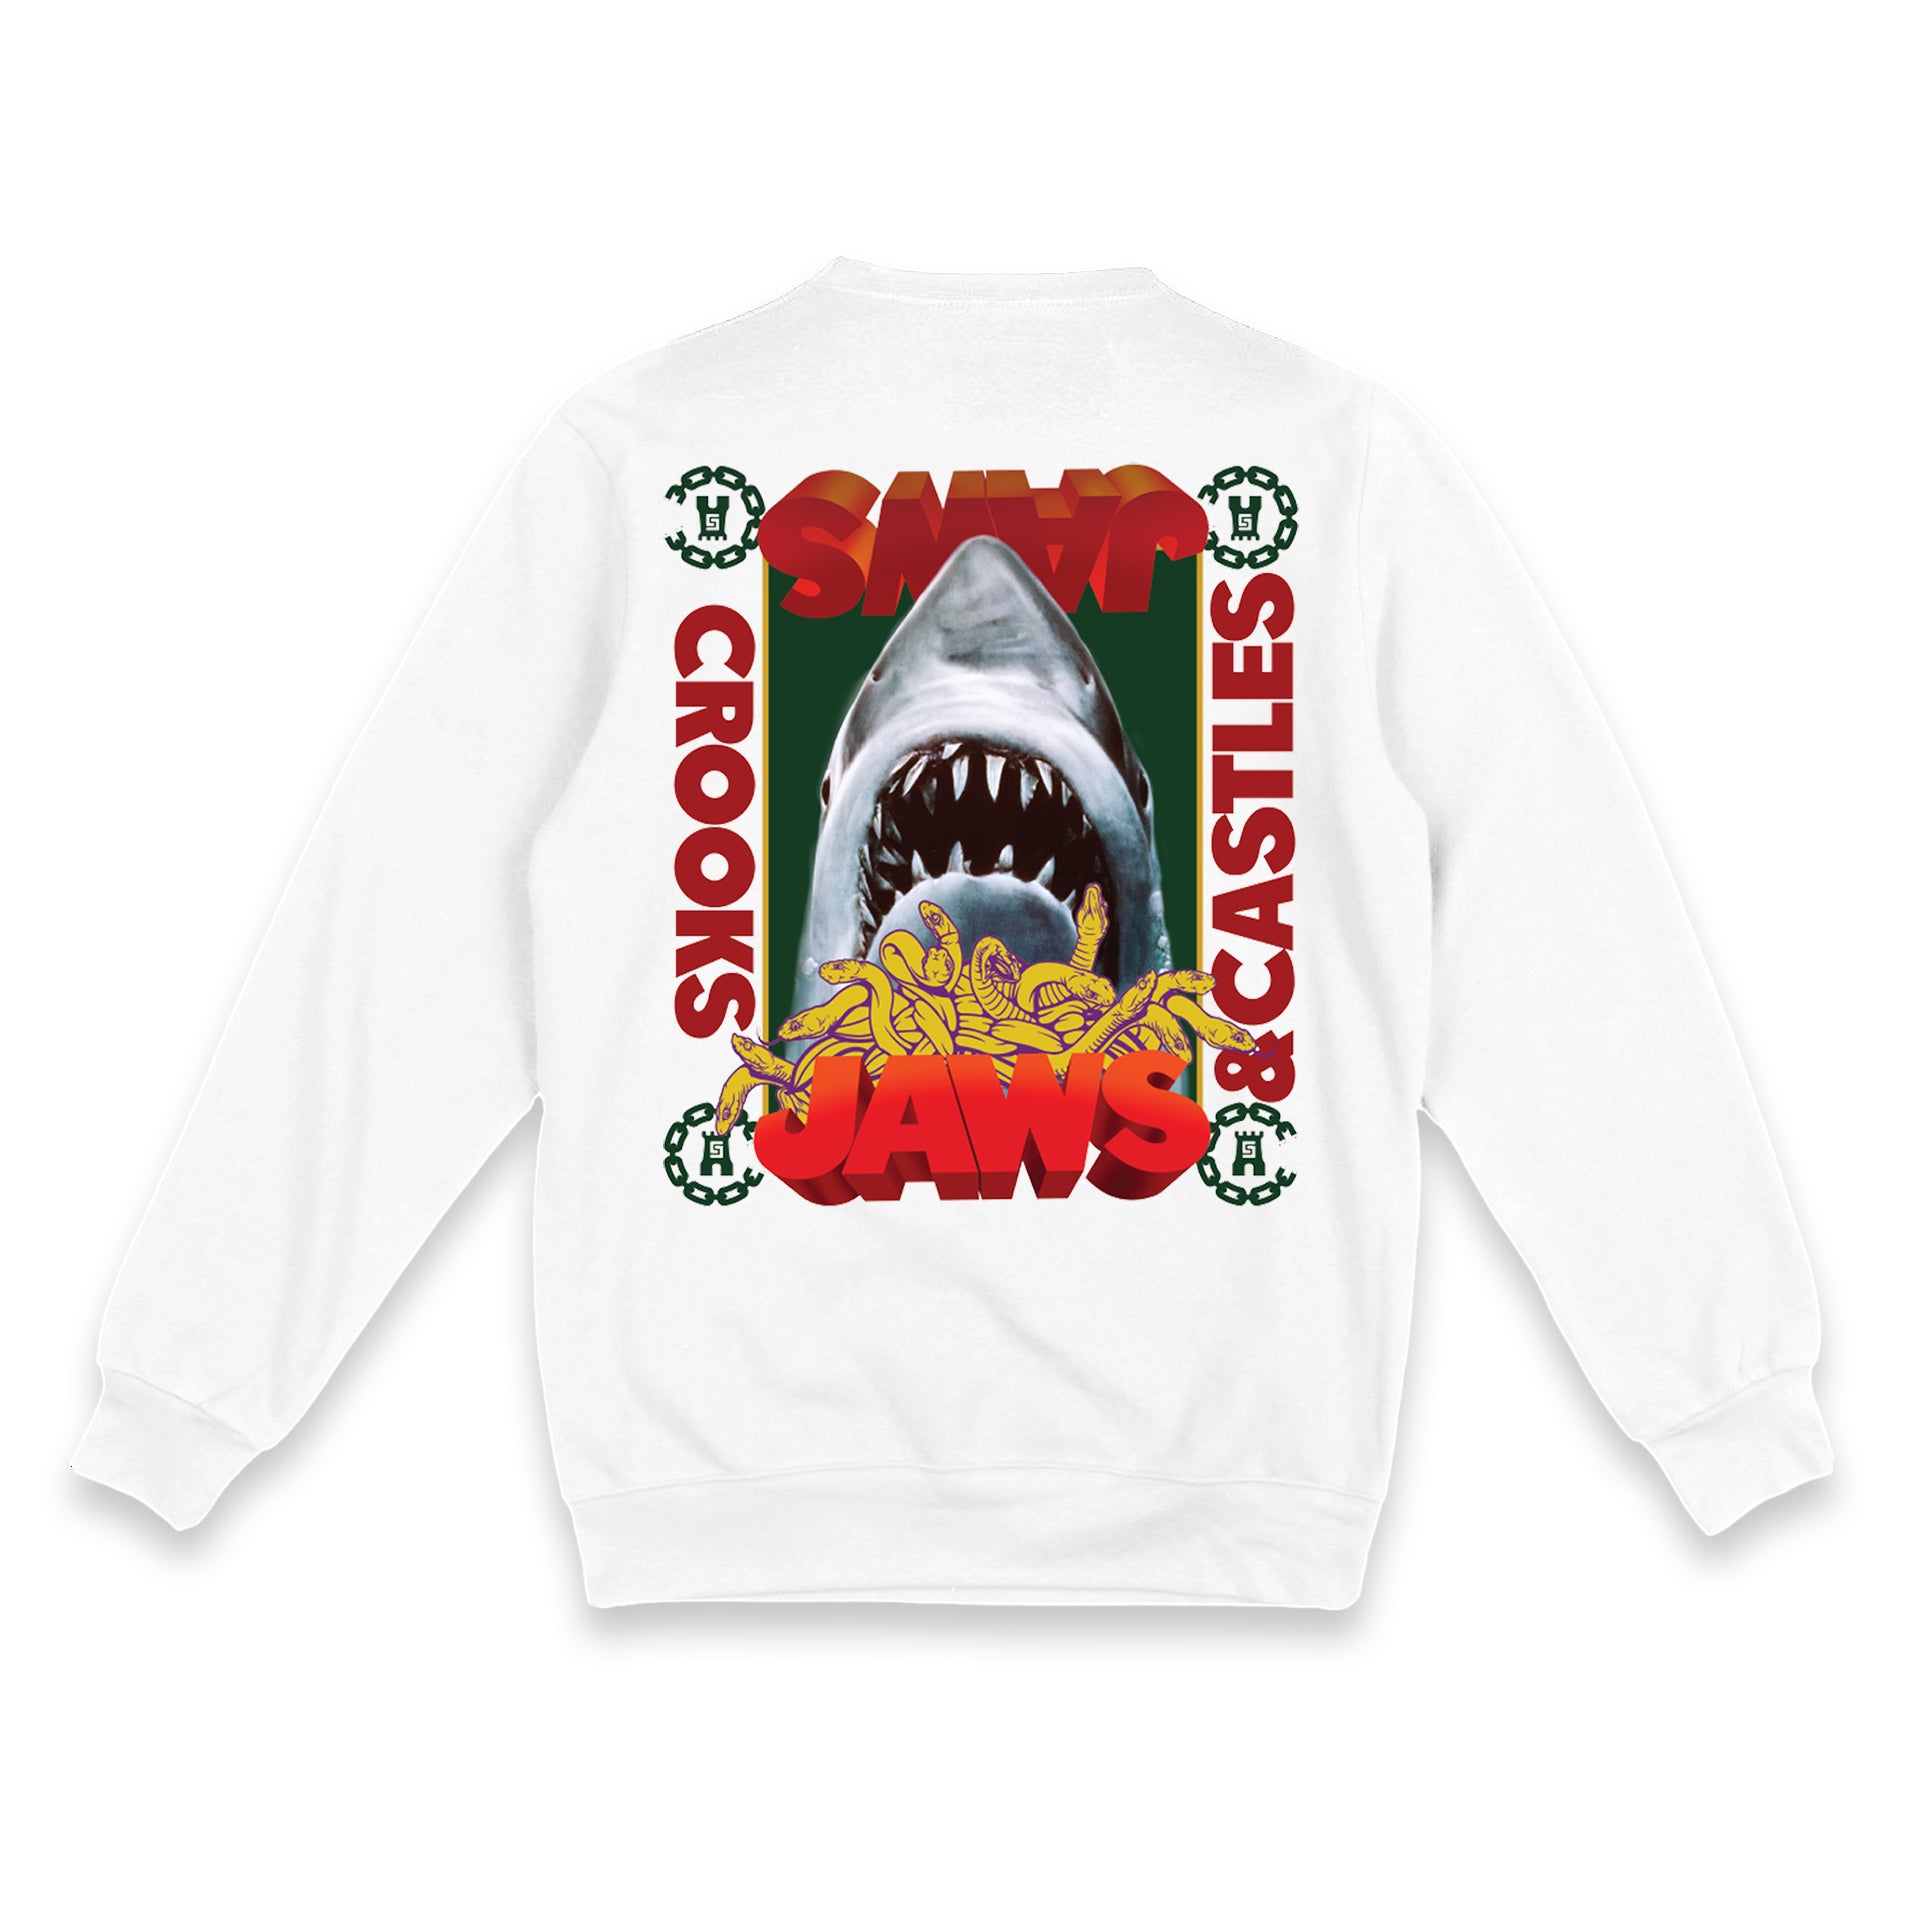 Jaws x Crooks Sweatshirt